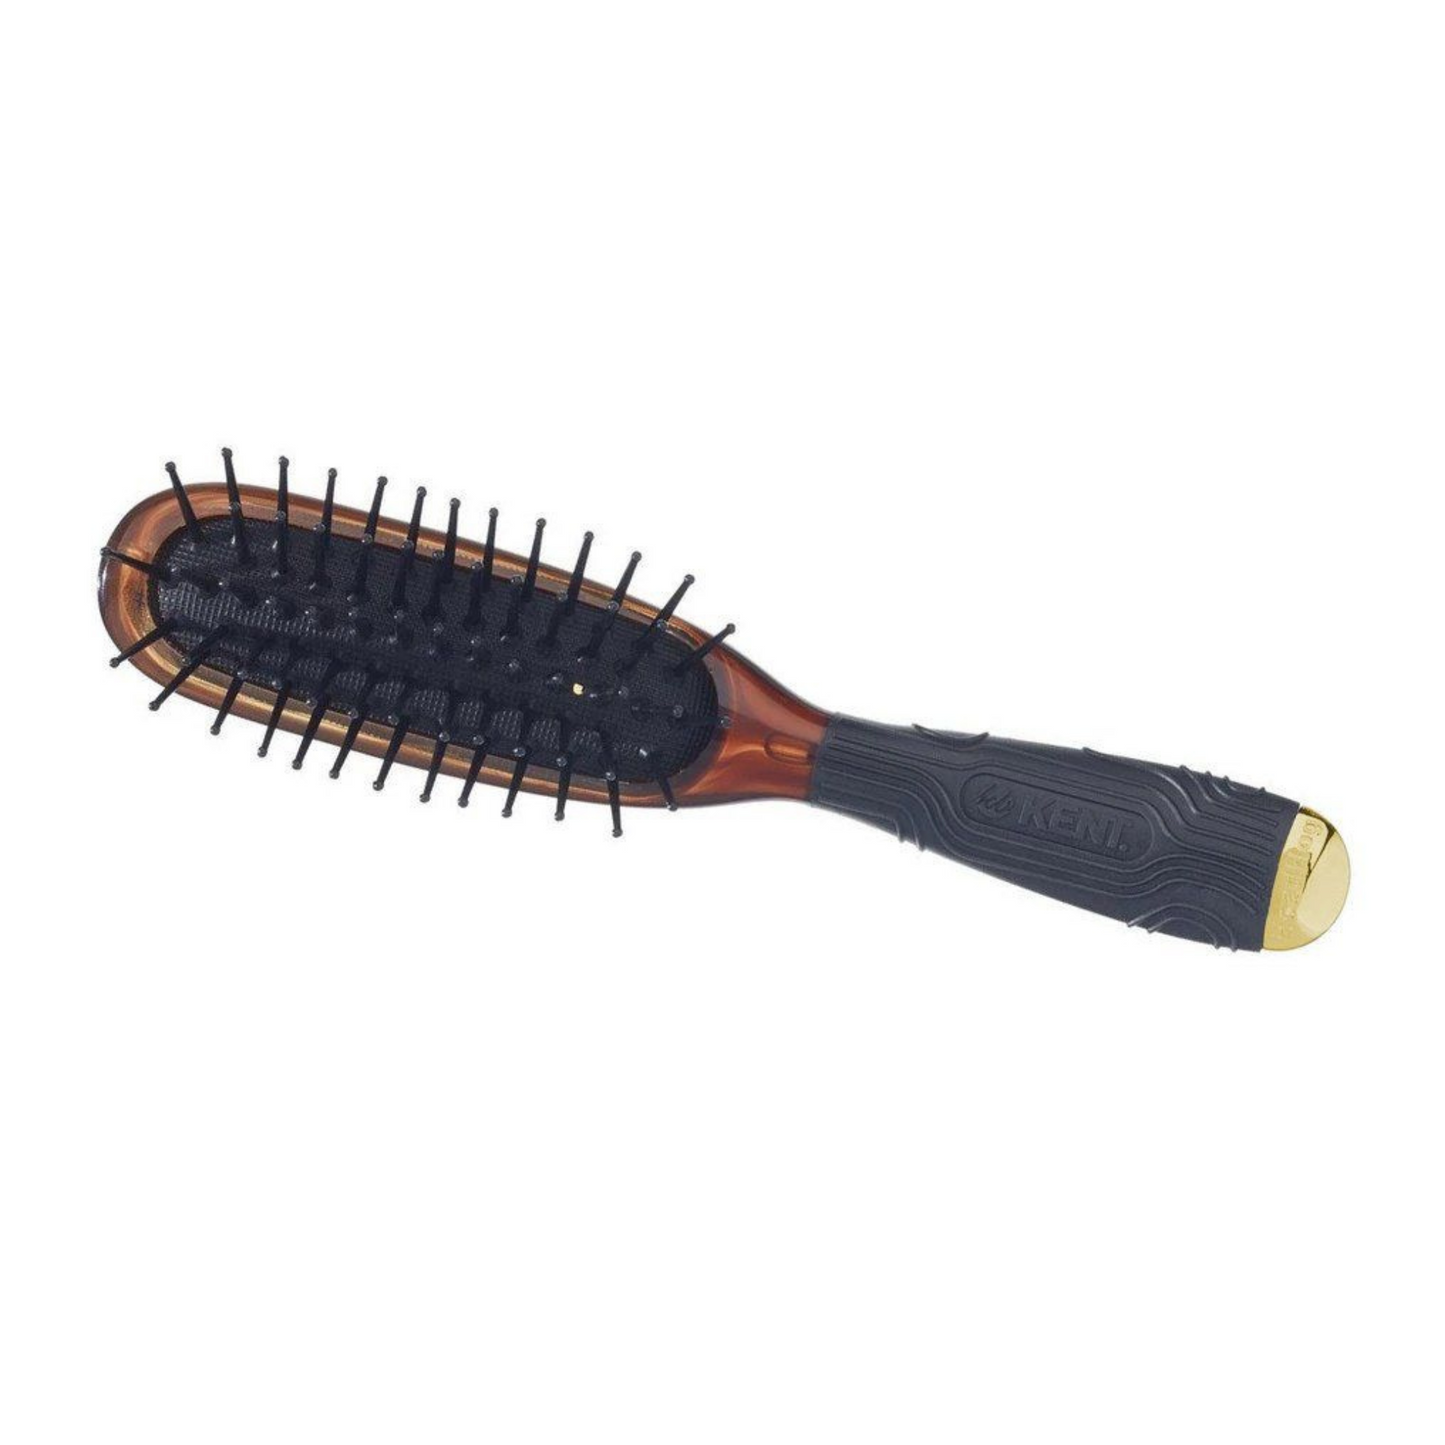 Primary image of Minihog Cushioned Nylon Ball Tip Quill Hairbrush - MINIHOG